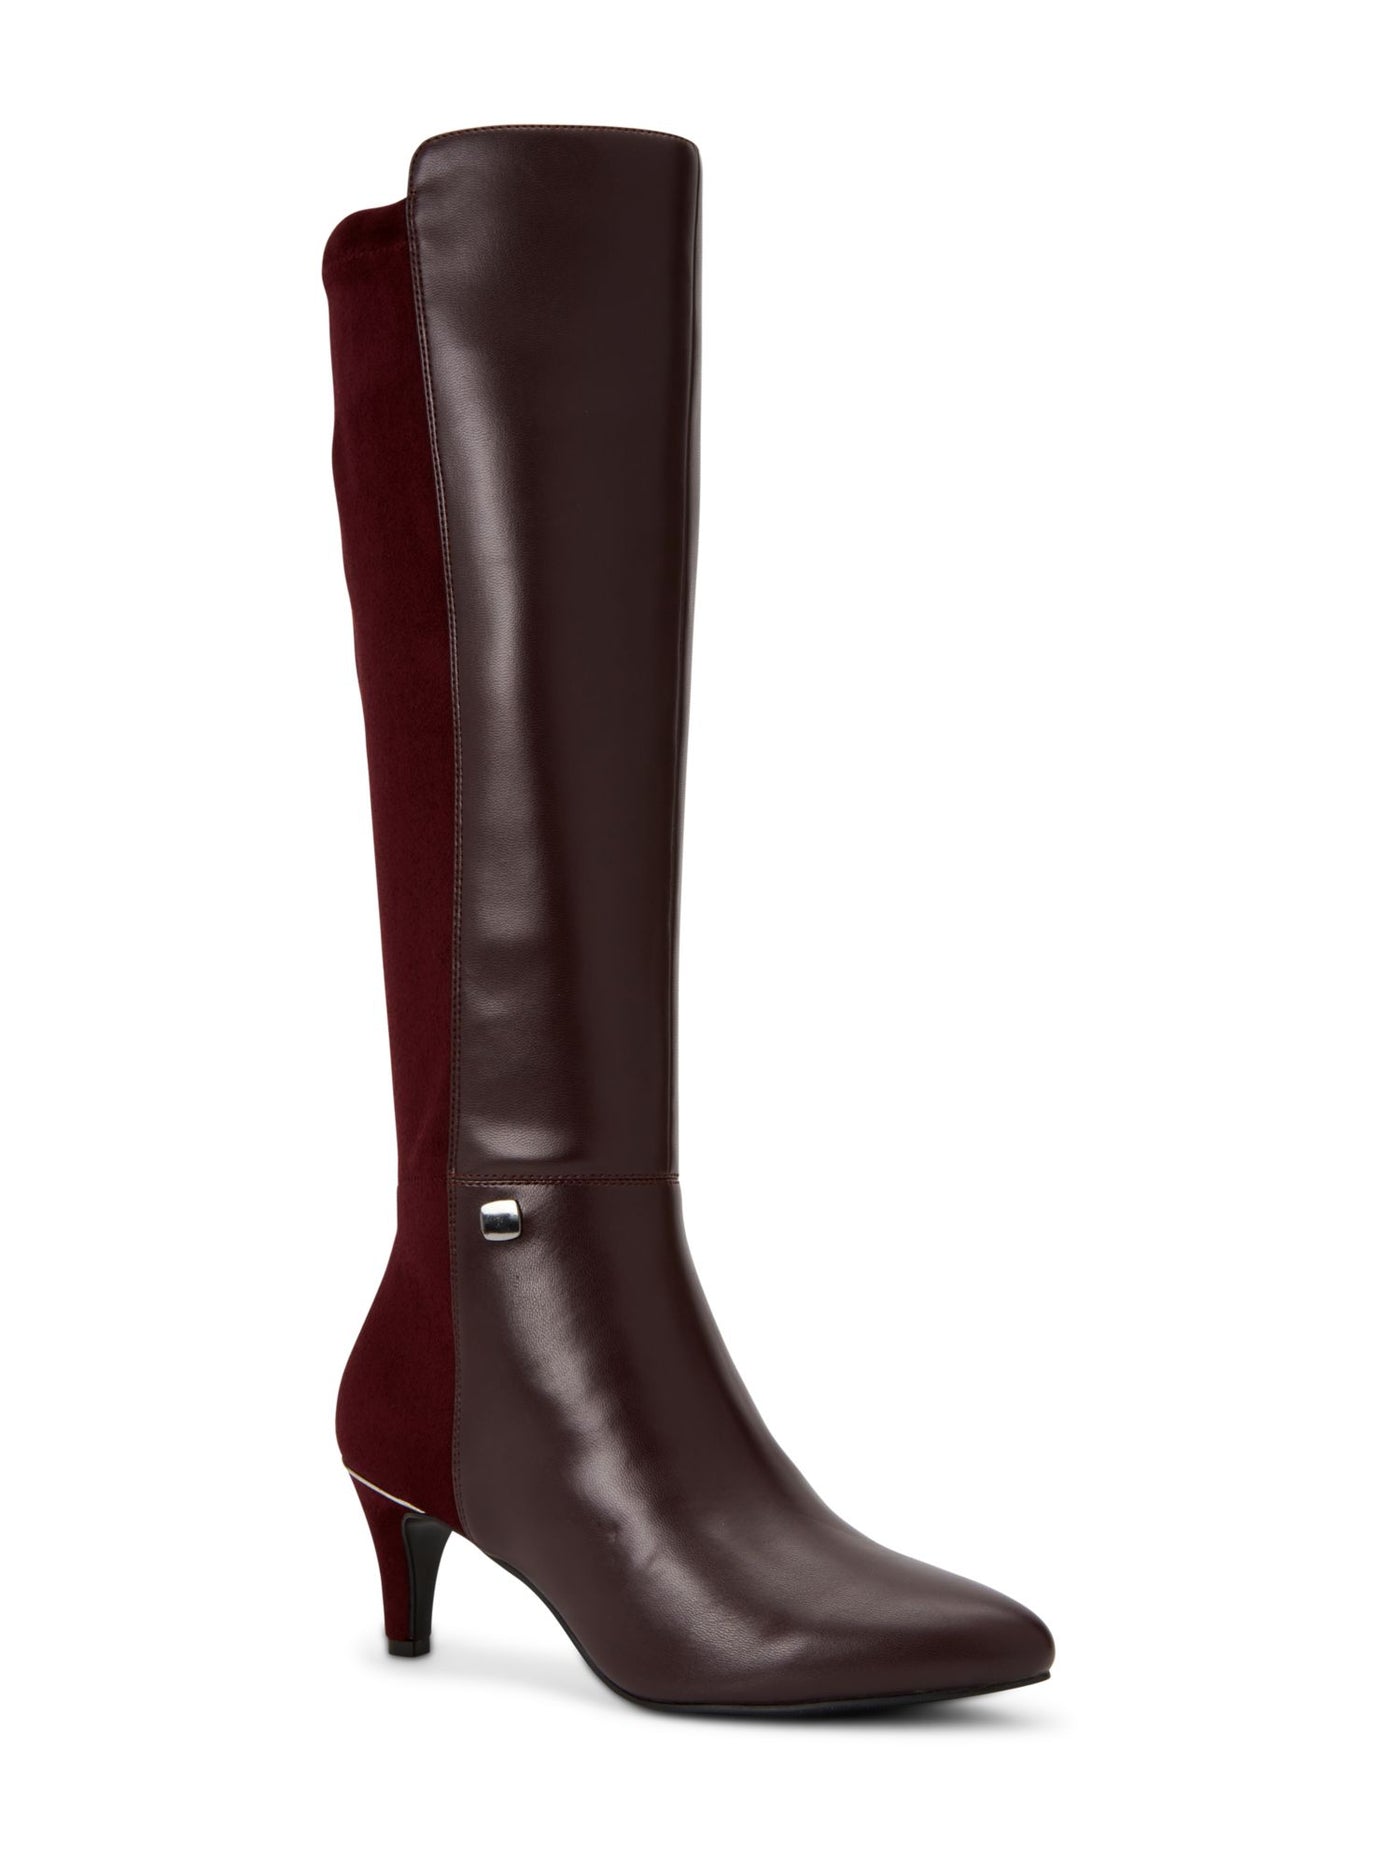 ALFANI Womens Burgundy Arch Support Cushioned Hakuu Almond Toe Kitten Heel Zip-Up Boots Shoes 5 M